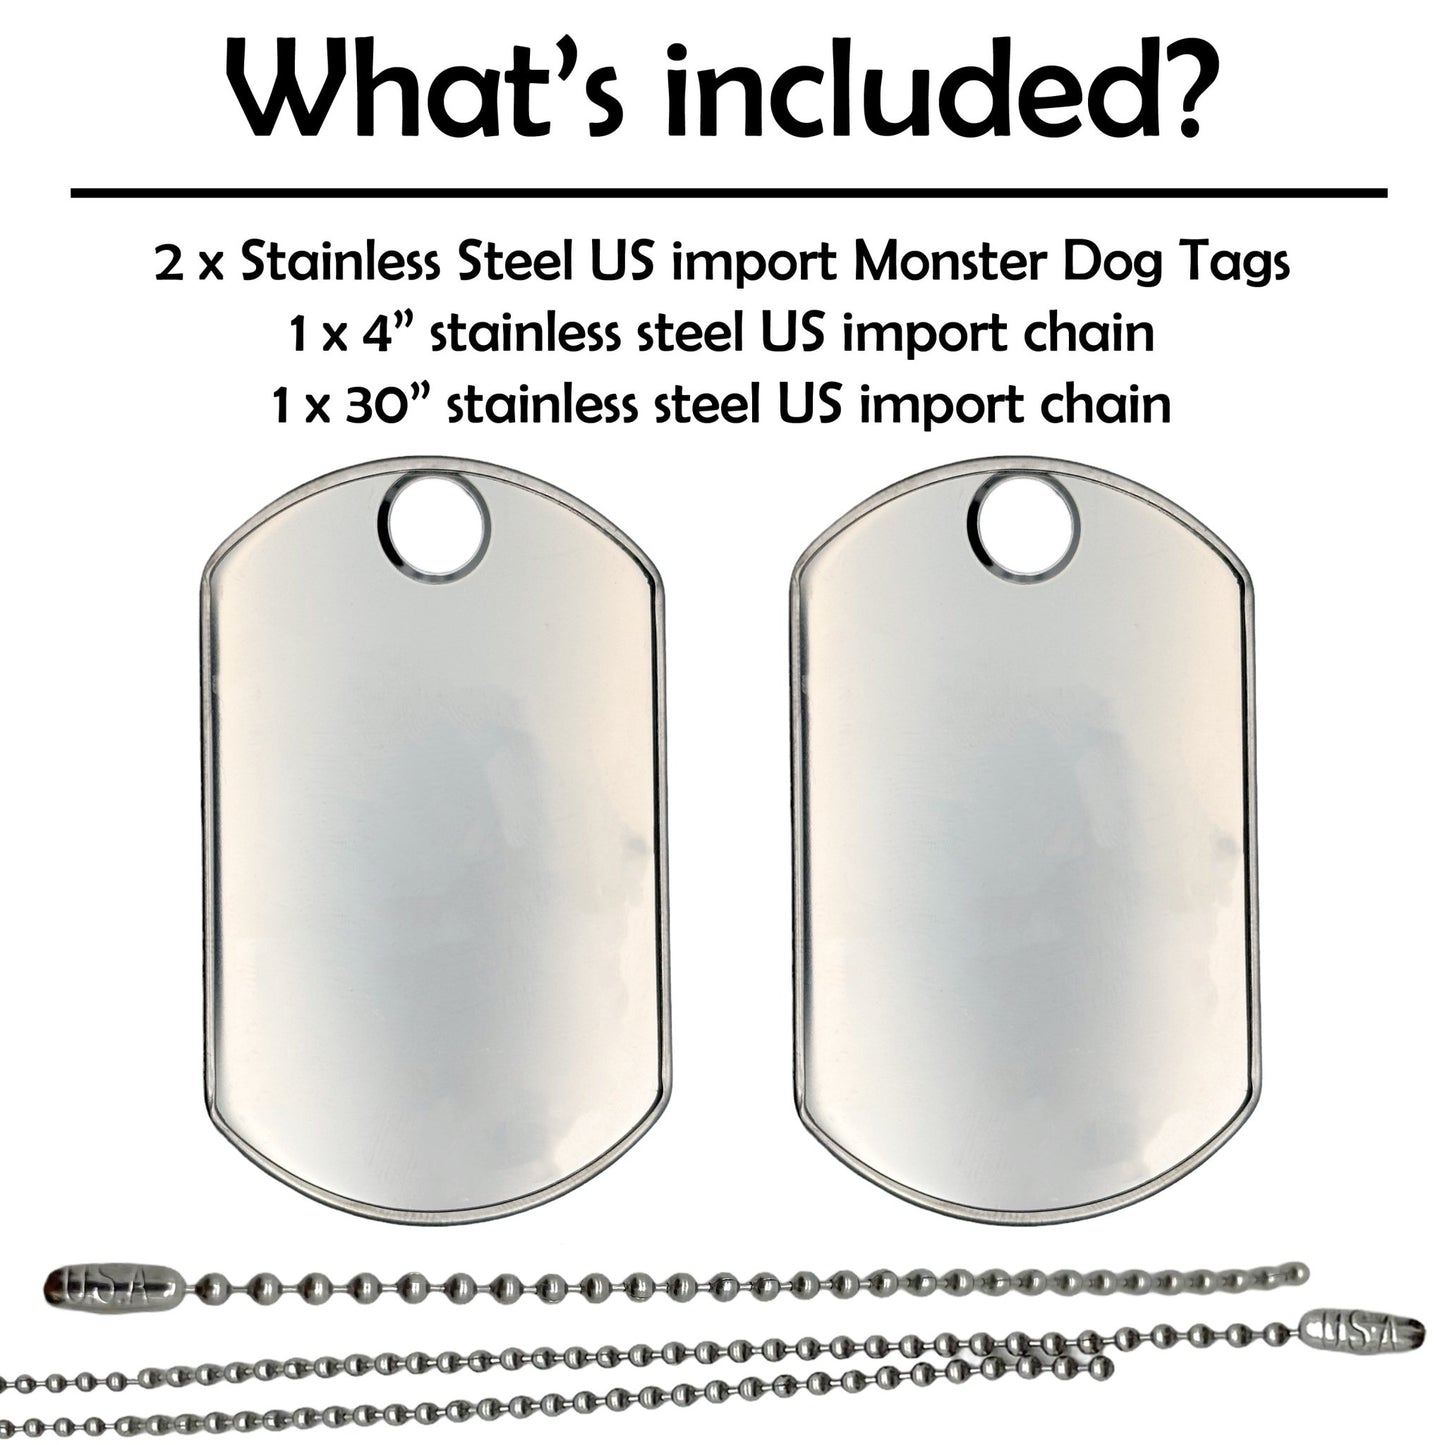 MONSTER Size Blank Dog Tag Necklace Set - TheDogTagCo